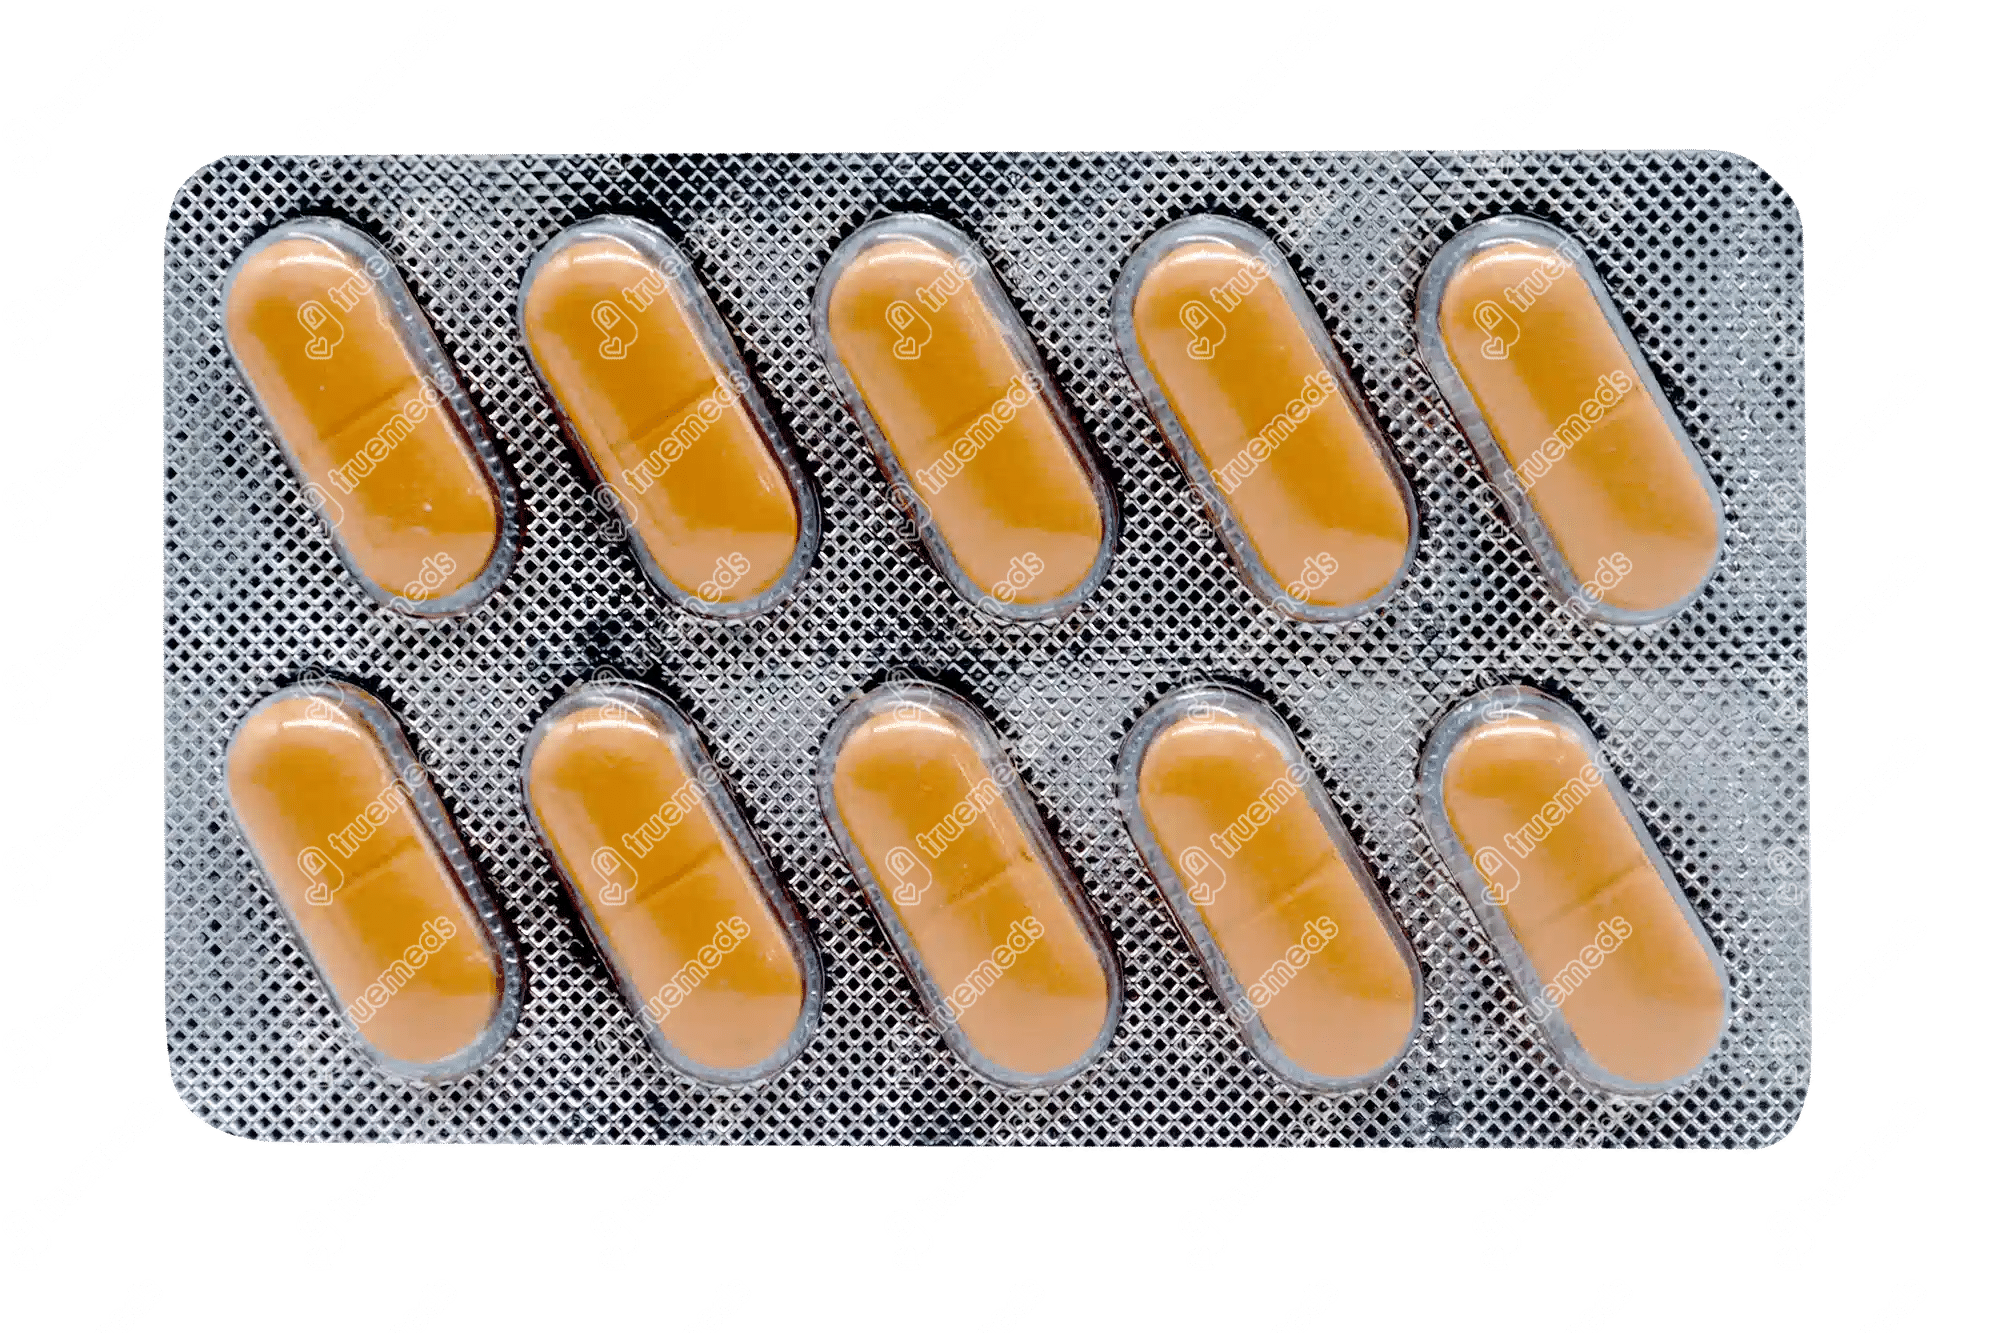 Daflon® 1000mg Tablets x 30